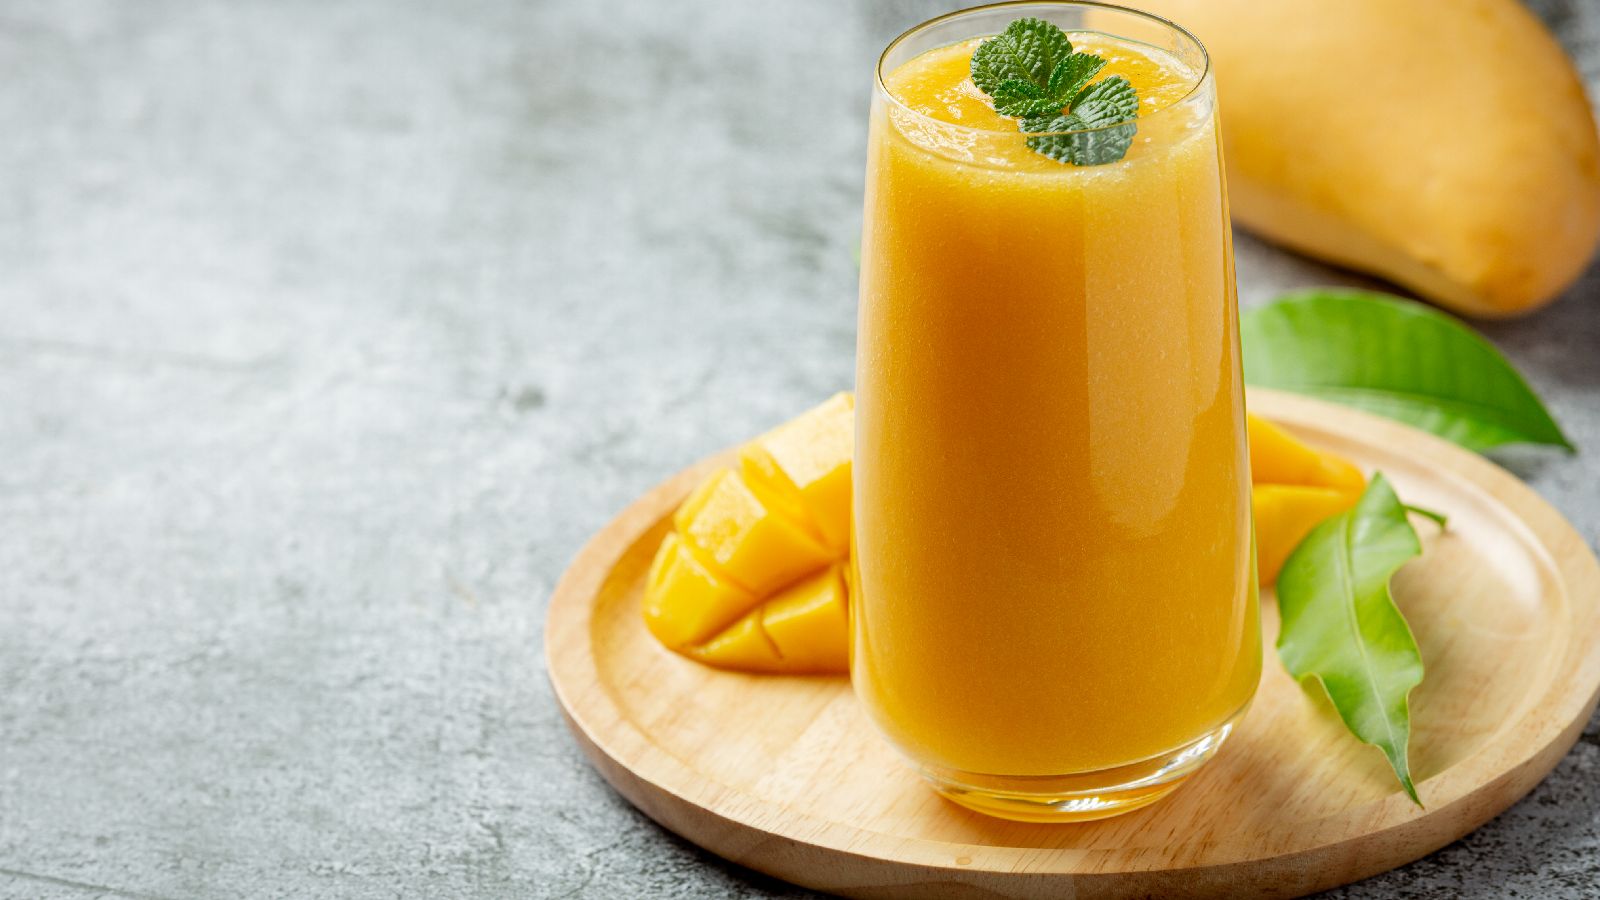 Mango lassi tops best dairy beverage list: 5 mango lassi recipes to try